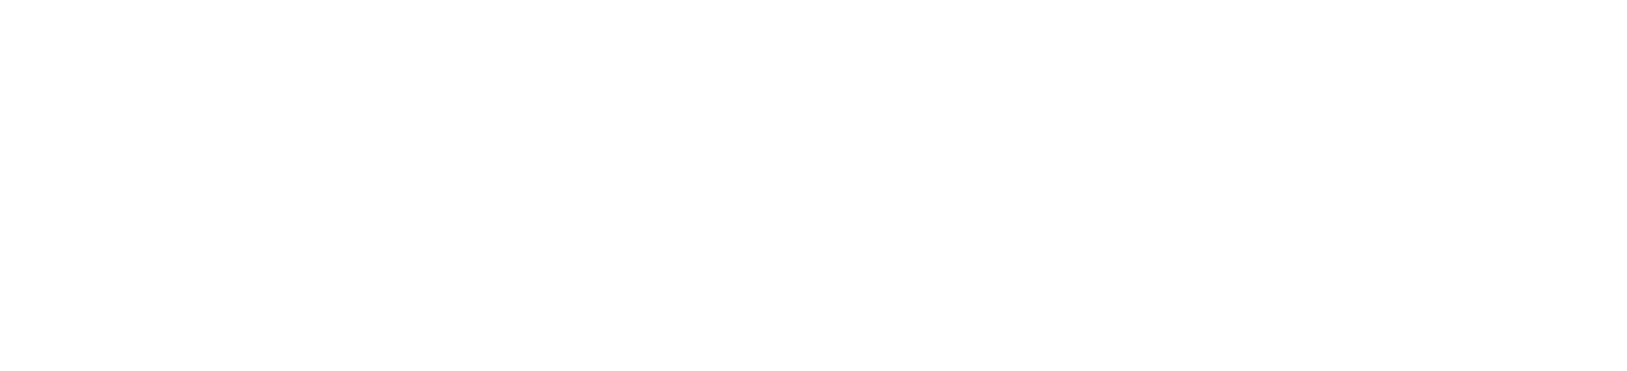 KE education logo with Georgetown County School District